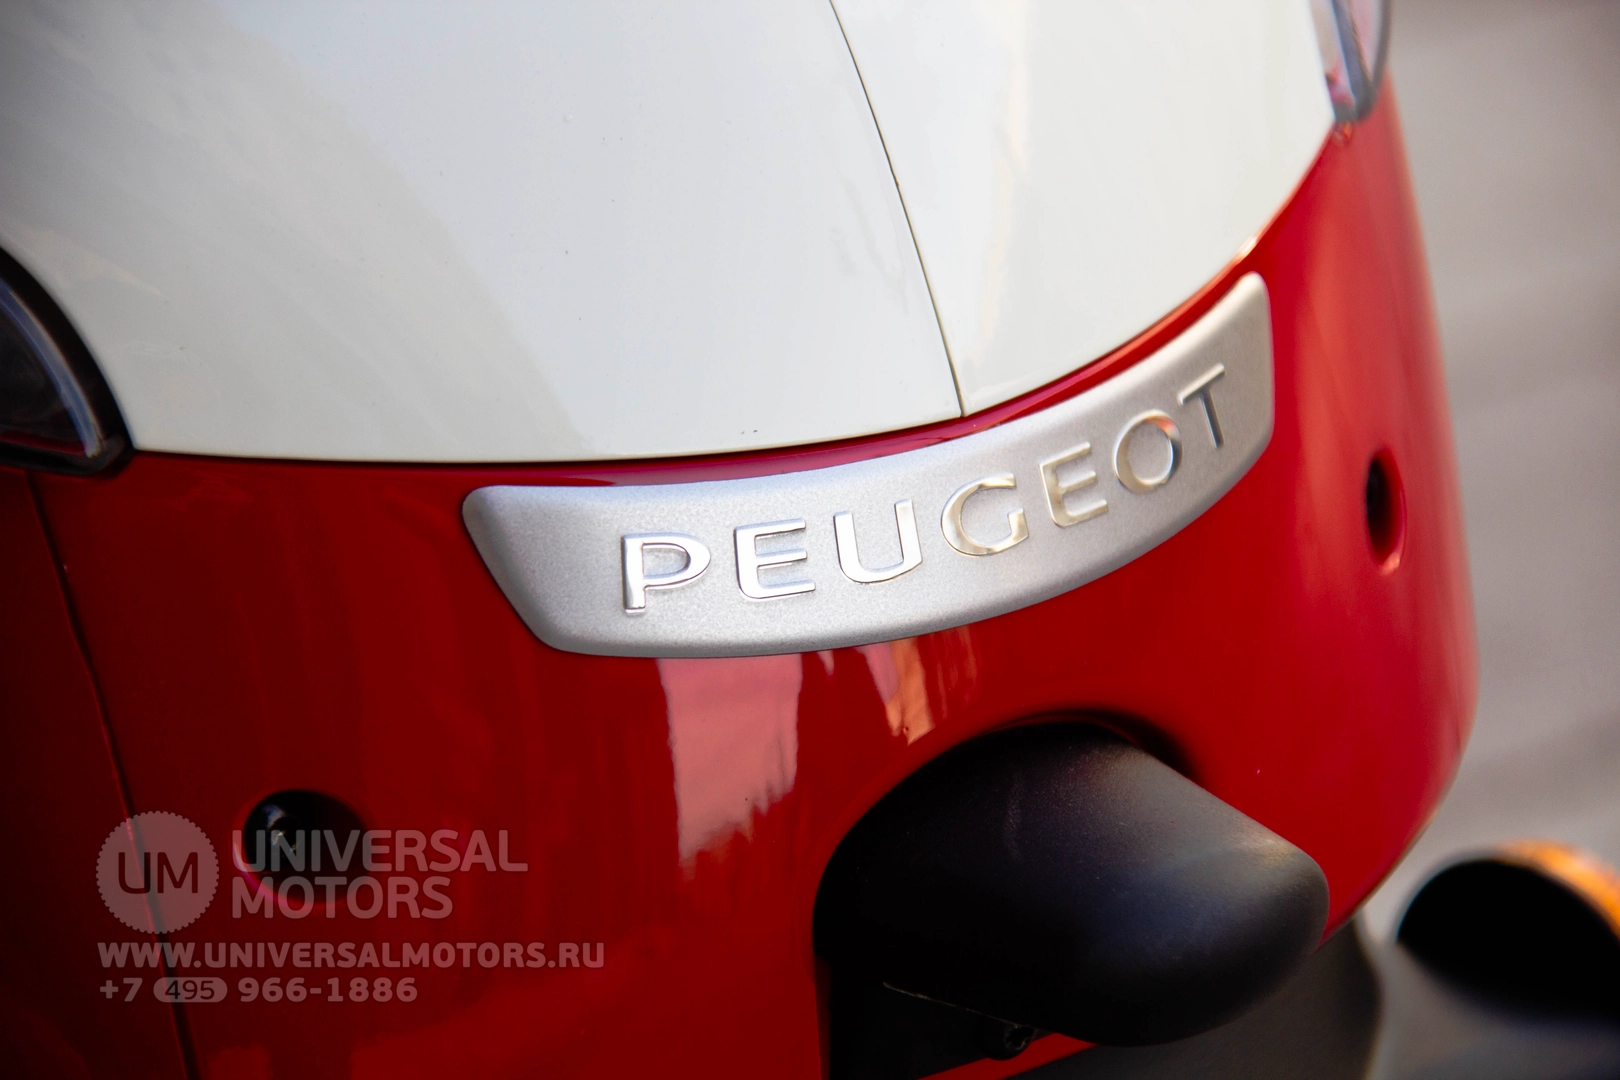 Скутер Peugeot DJANGO 125, 40022164352376190717